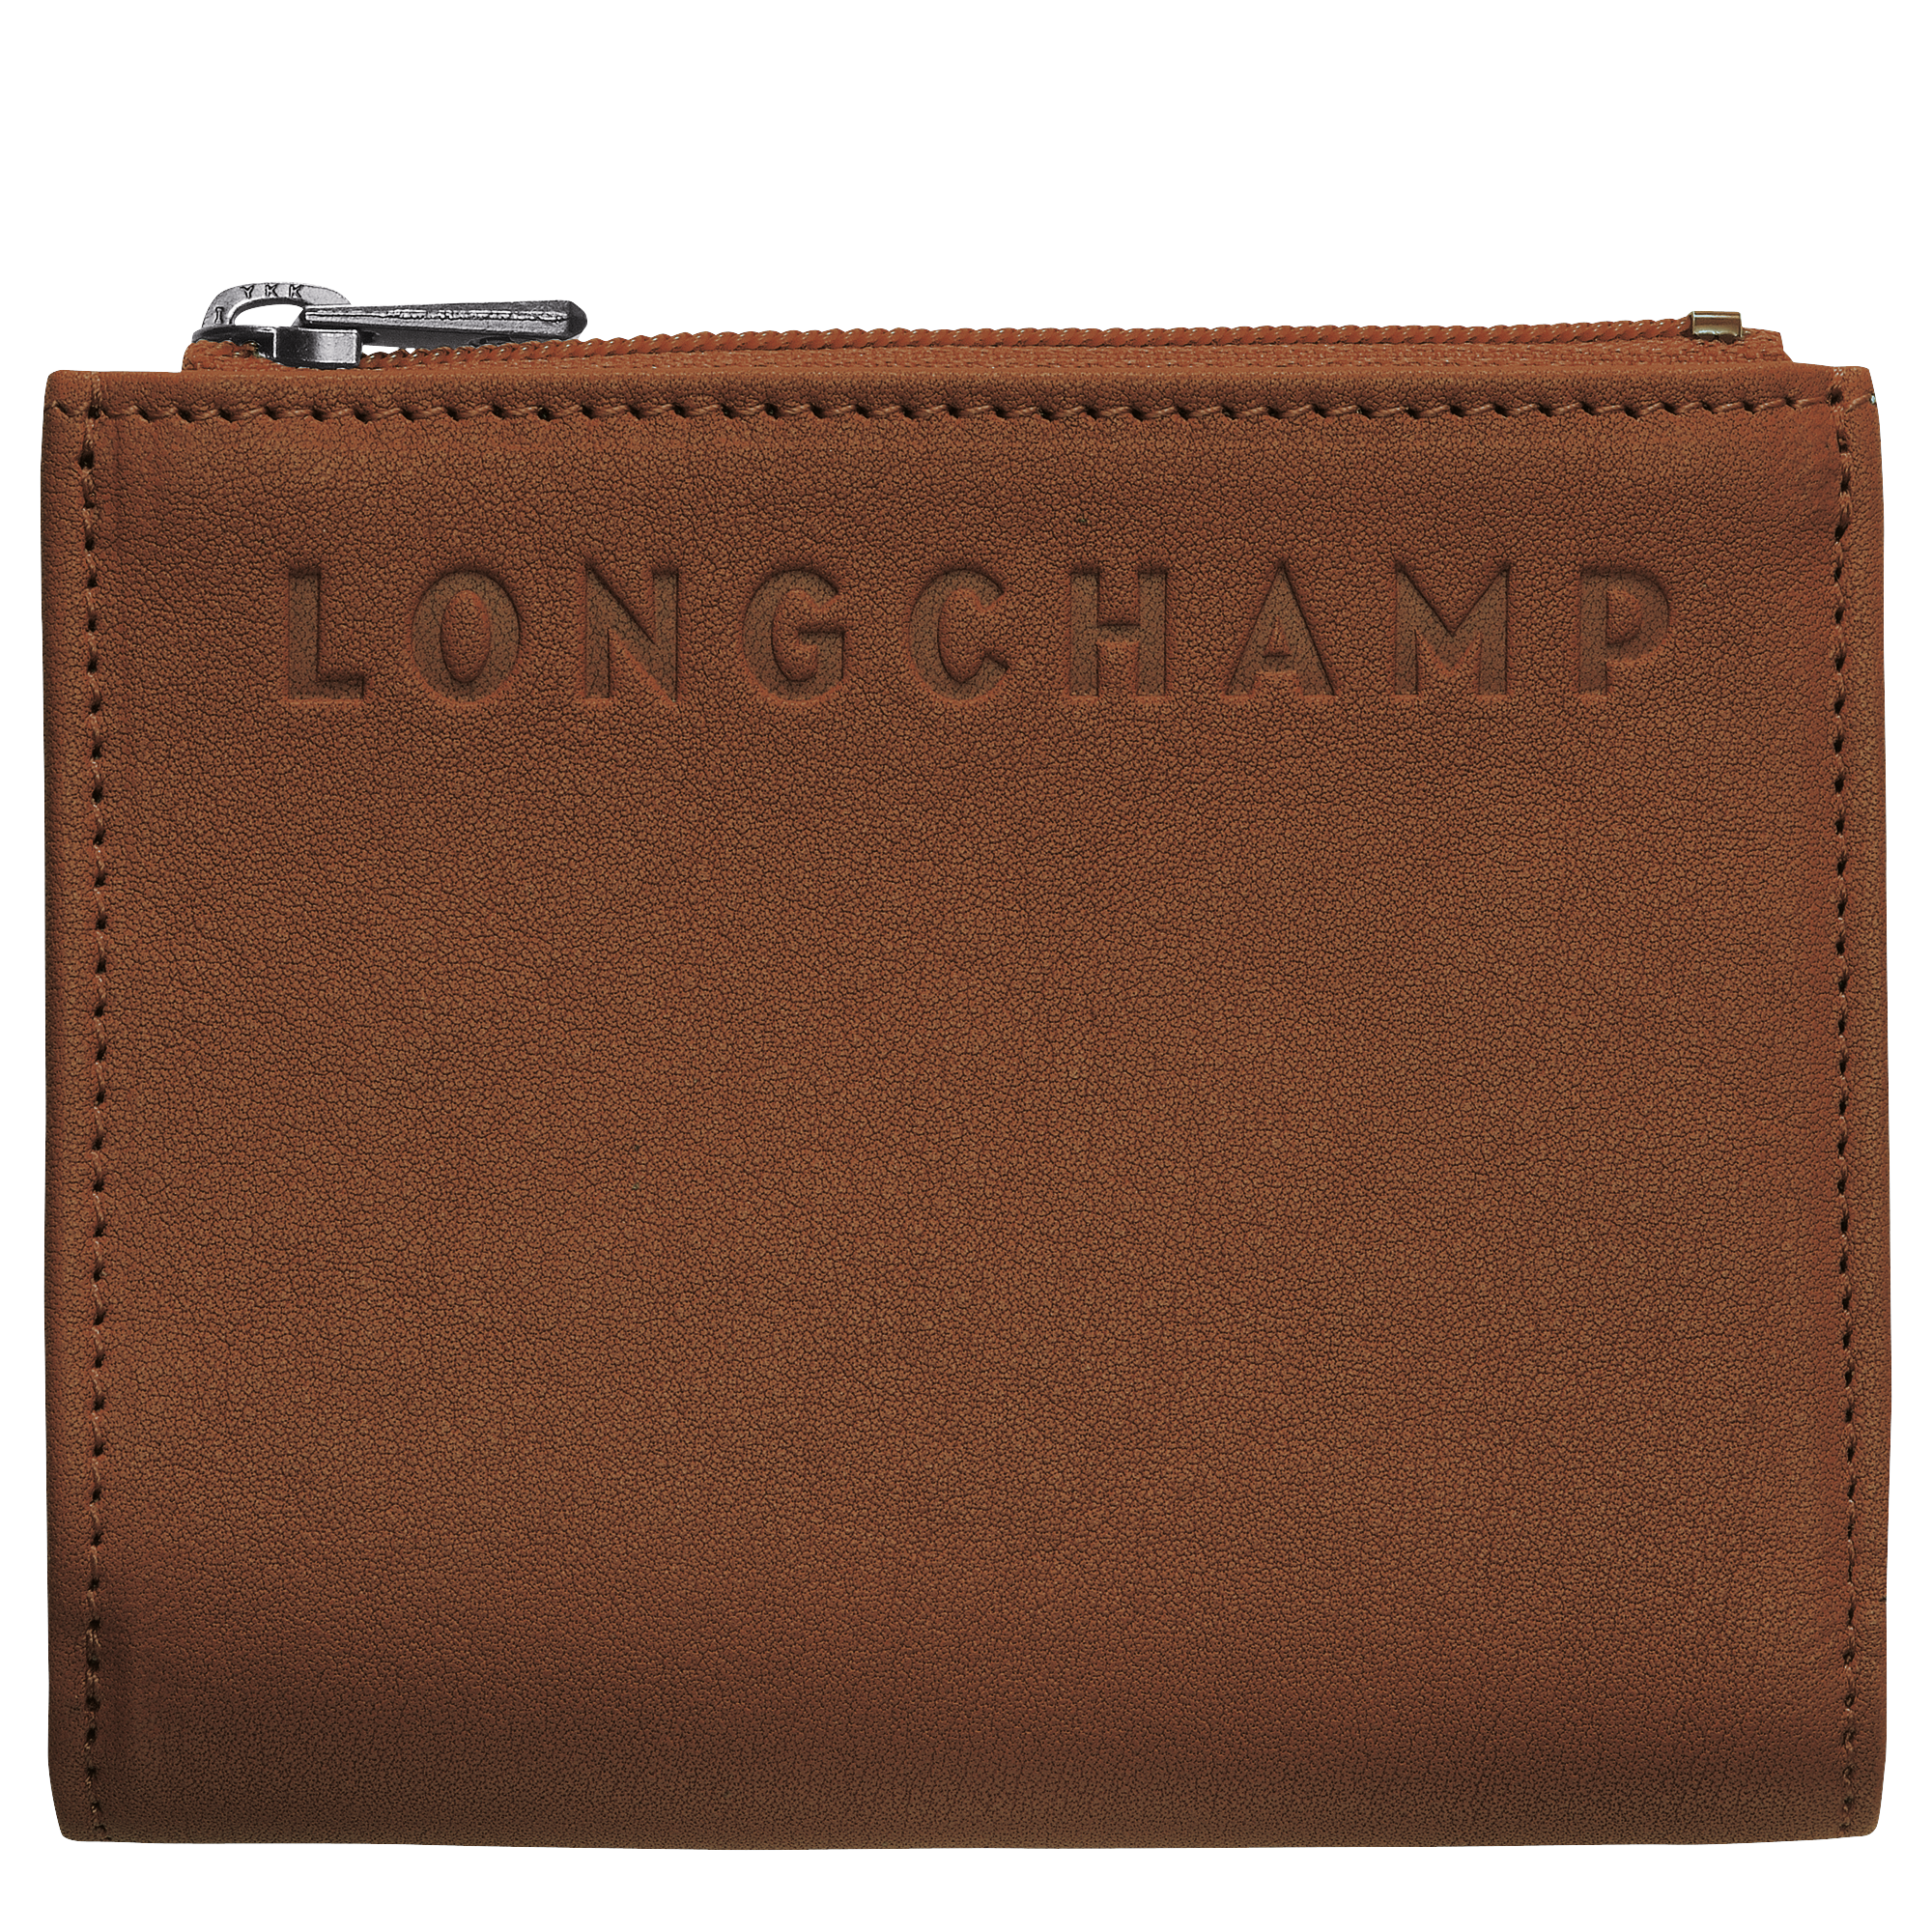 longchamp wallet